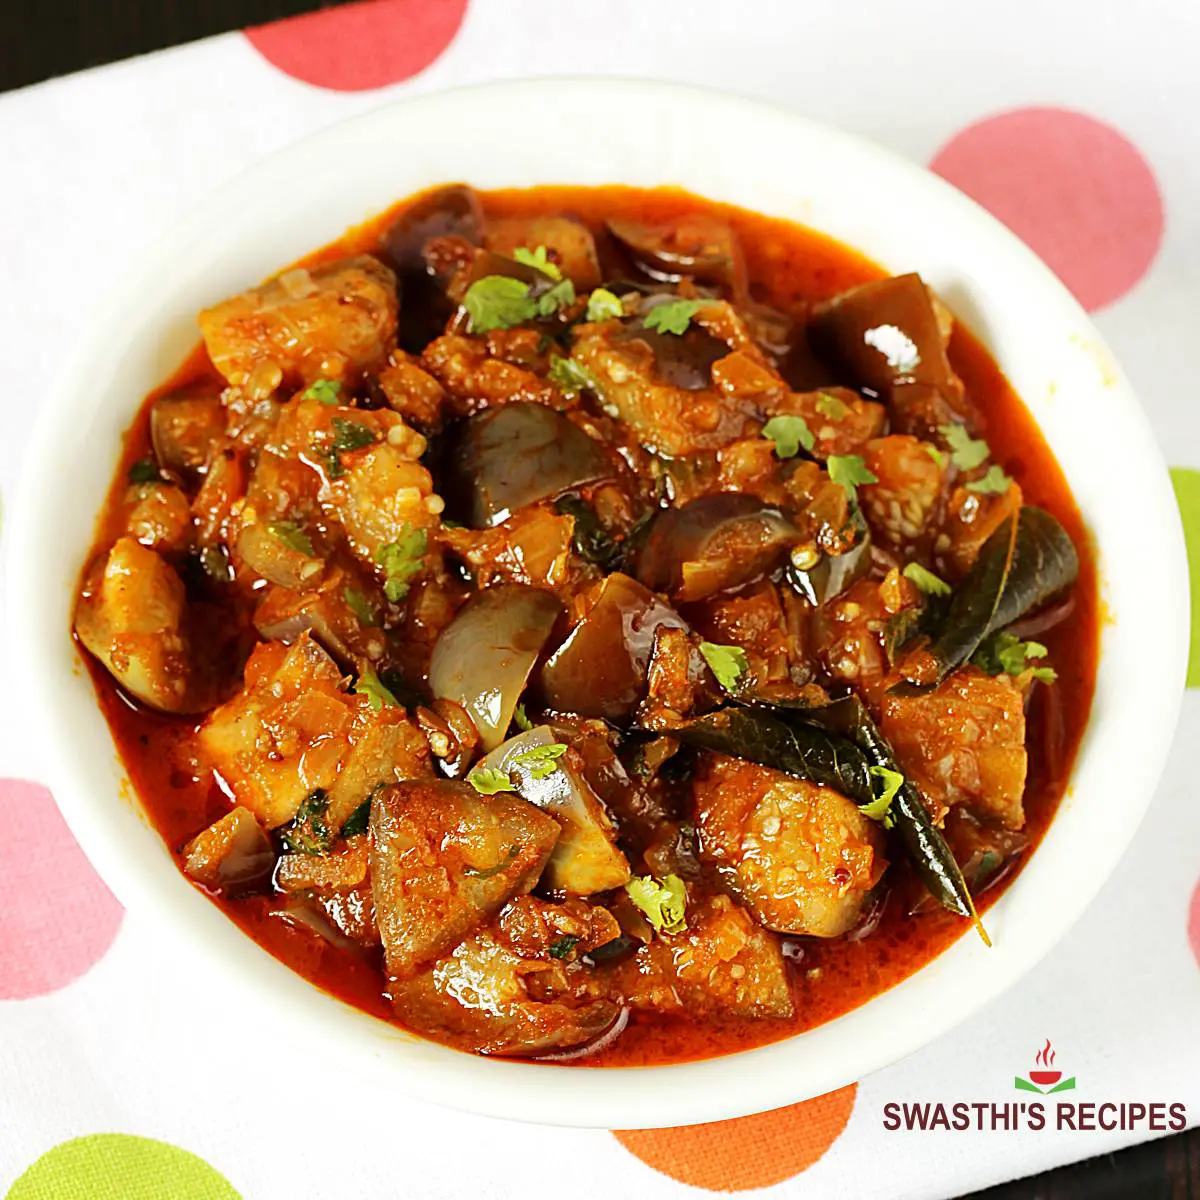 brinjal curry recipe